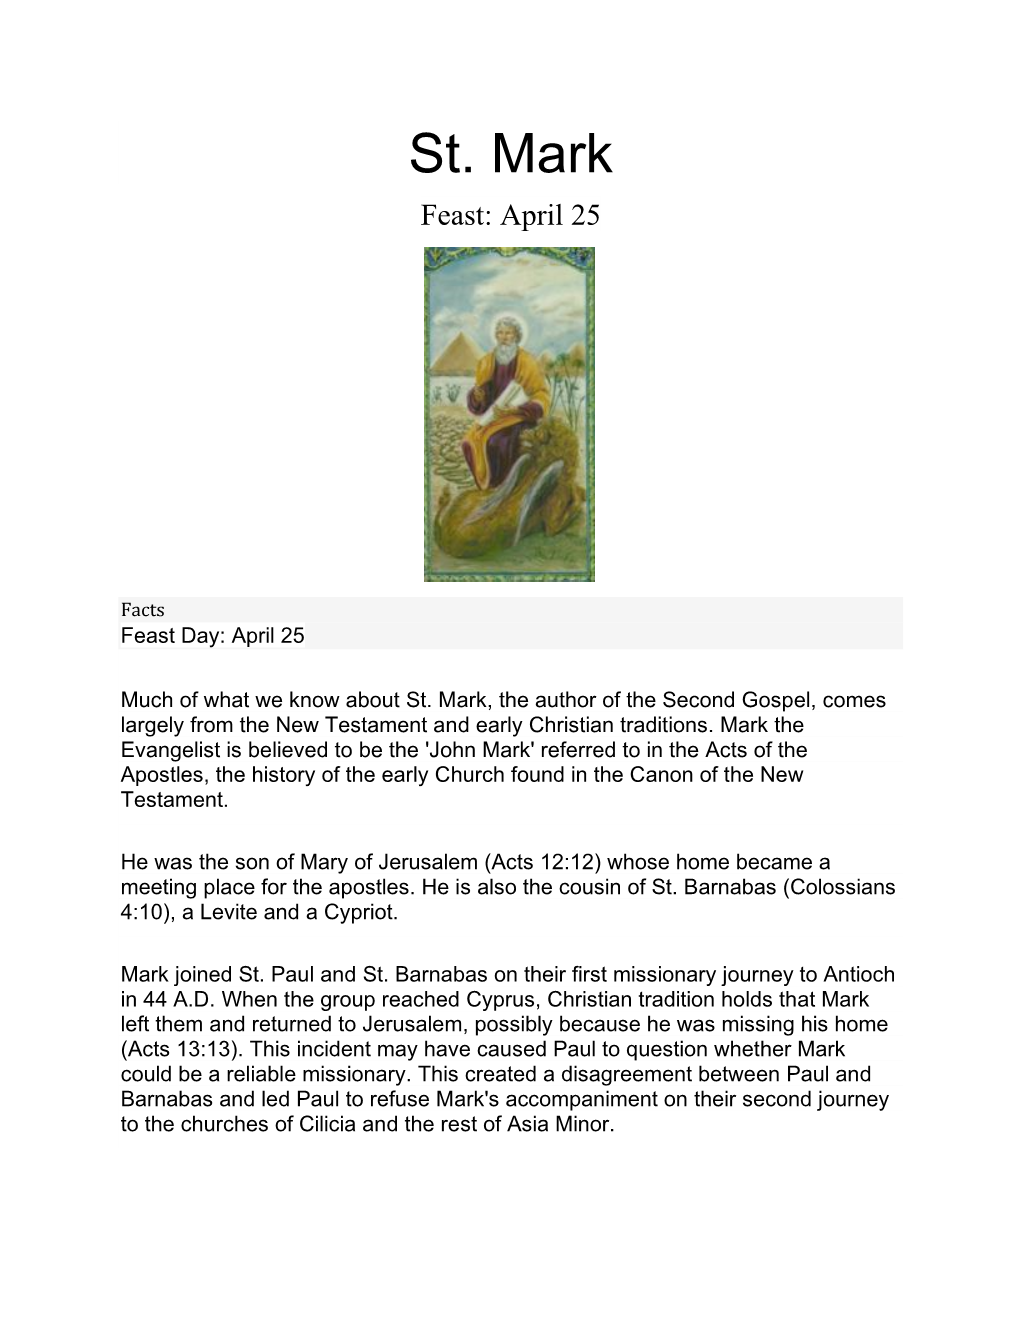 St. Mark Feast: April 25